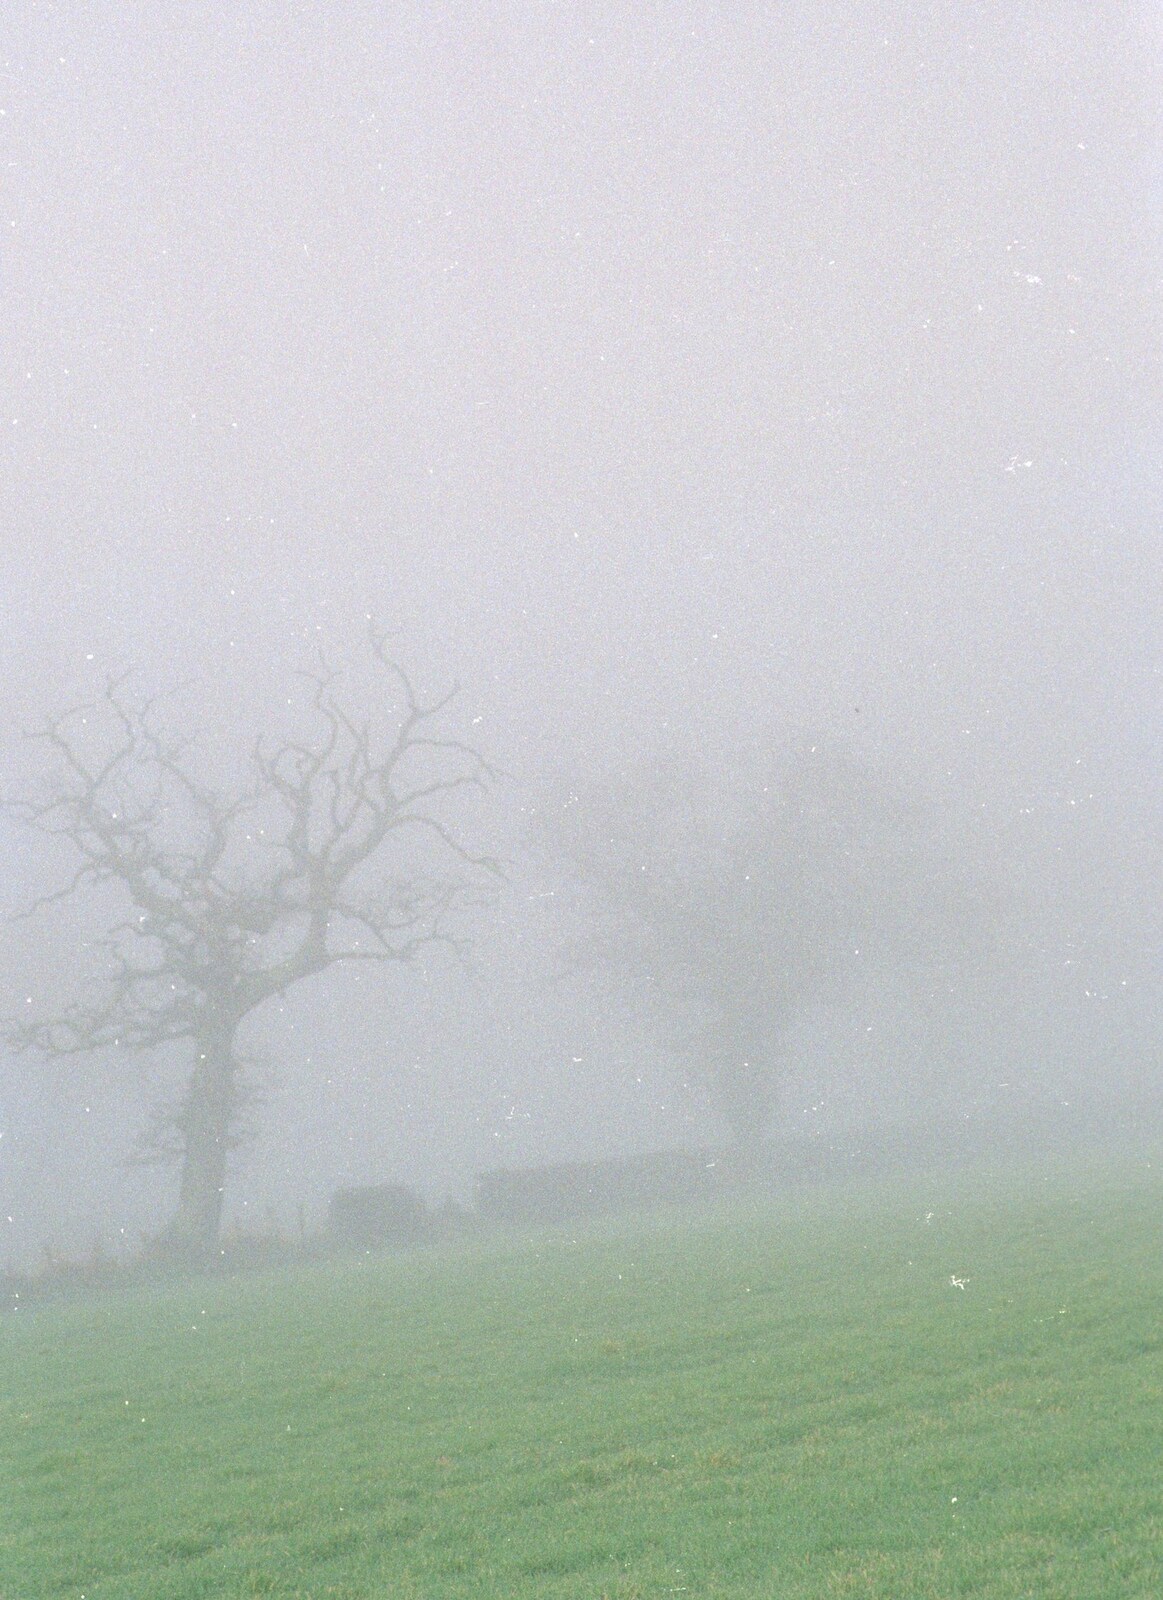 A Visit to Sheringham, North Norfolk - 20th November 1987: Misty trees somewhere